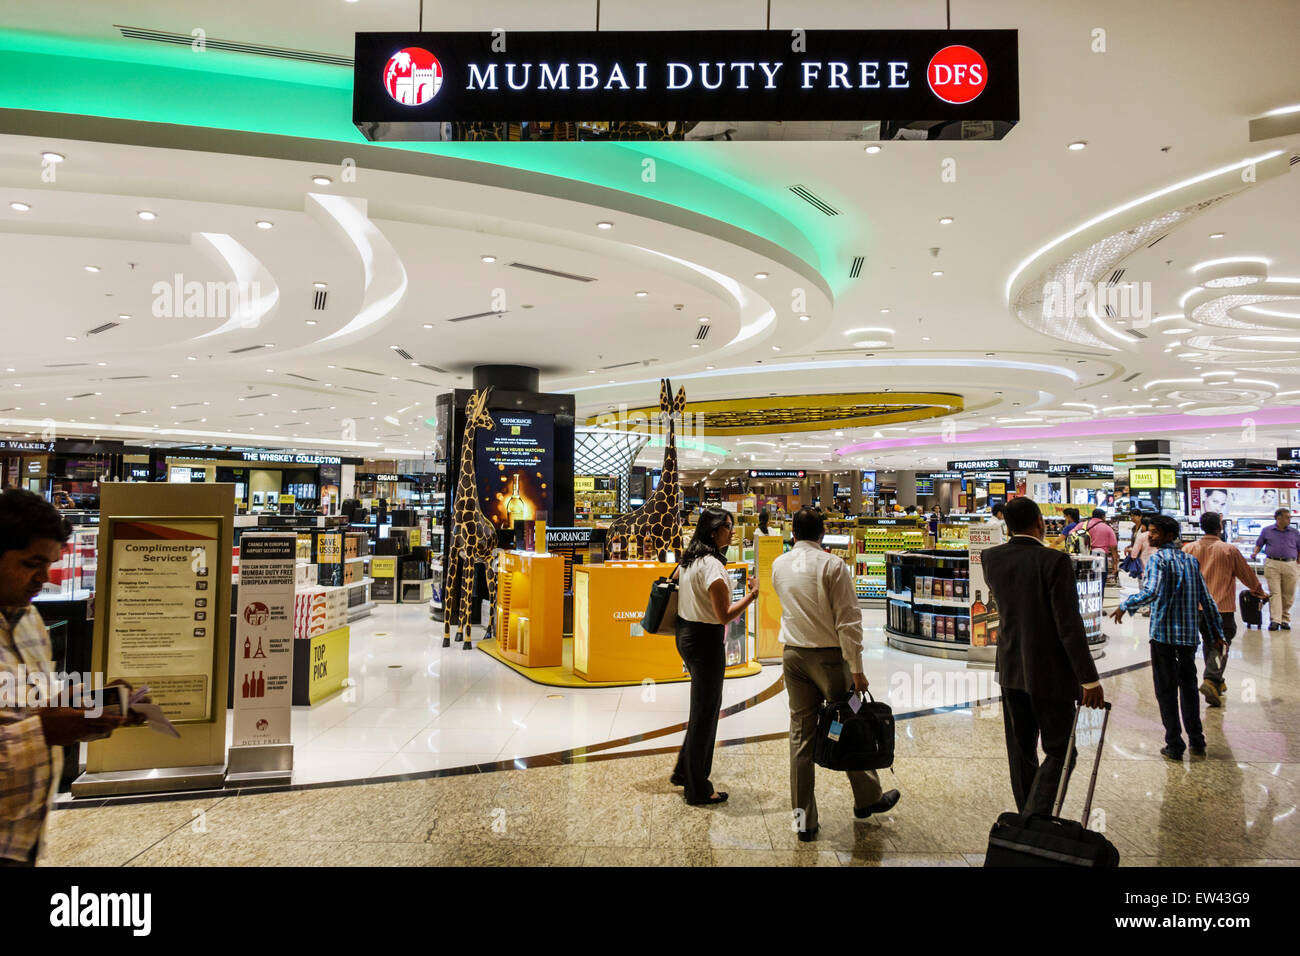 Mumbai India,Chhatrapati Shivaji International Airport,terminal,shopping shopper shoppers shop shops market markets marketplace buying selling,retail Stock Photo